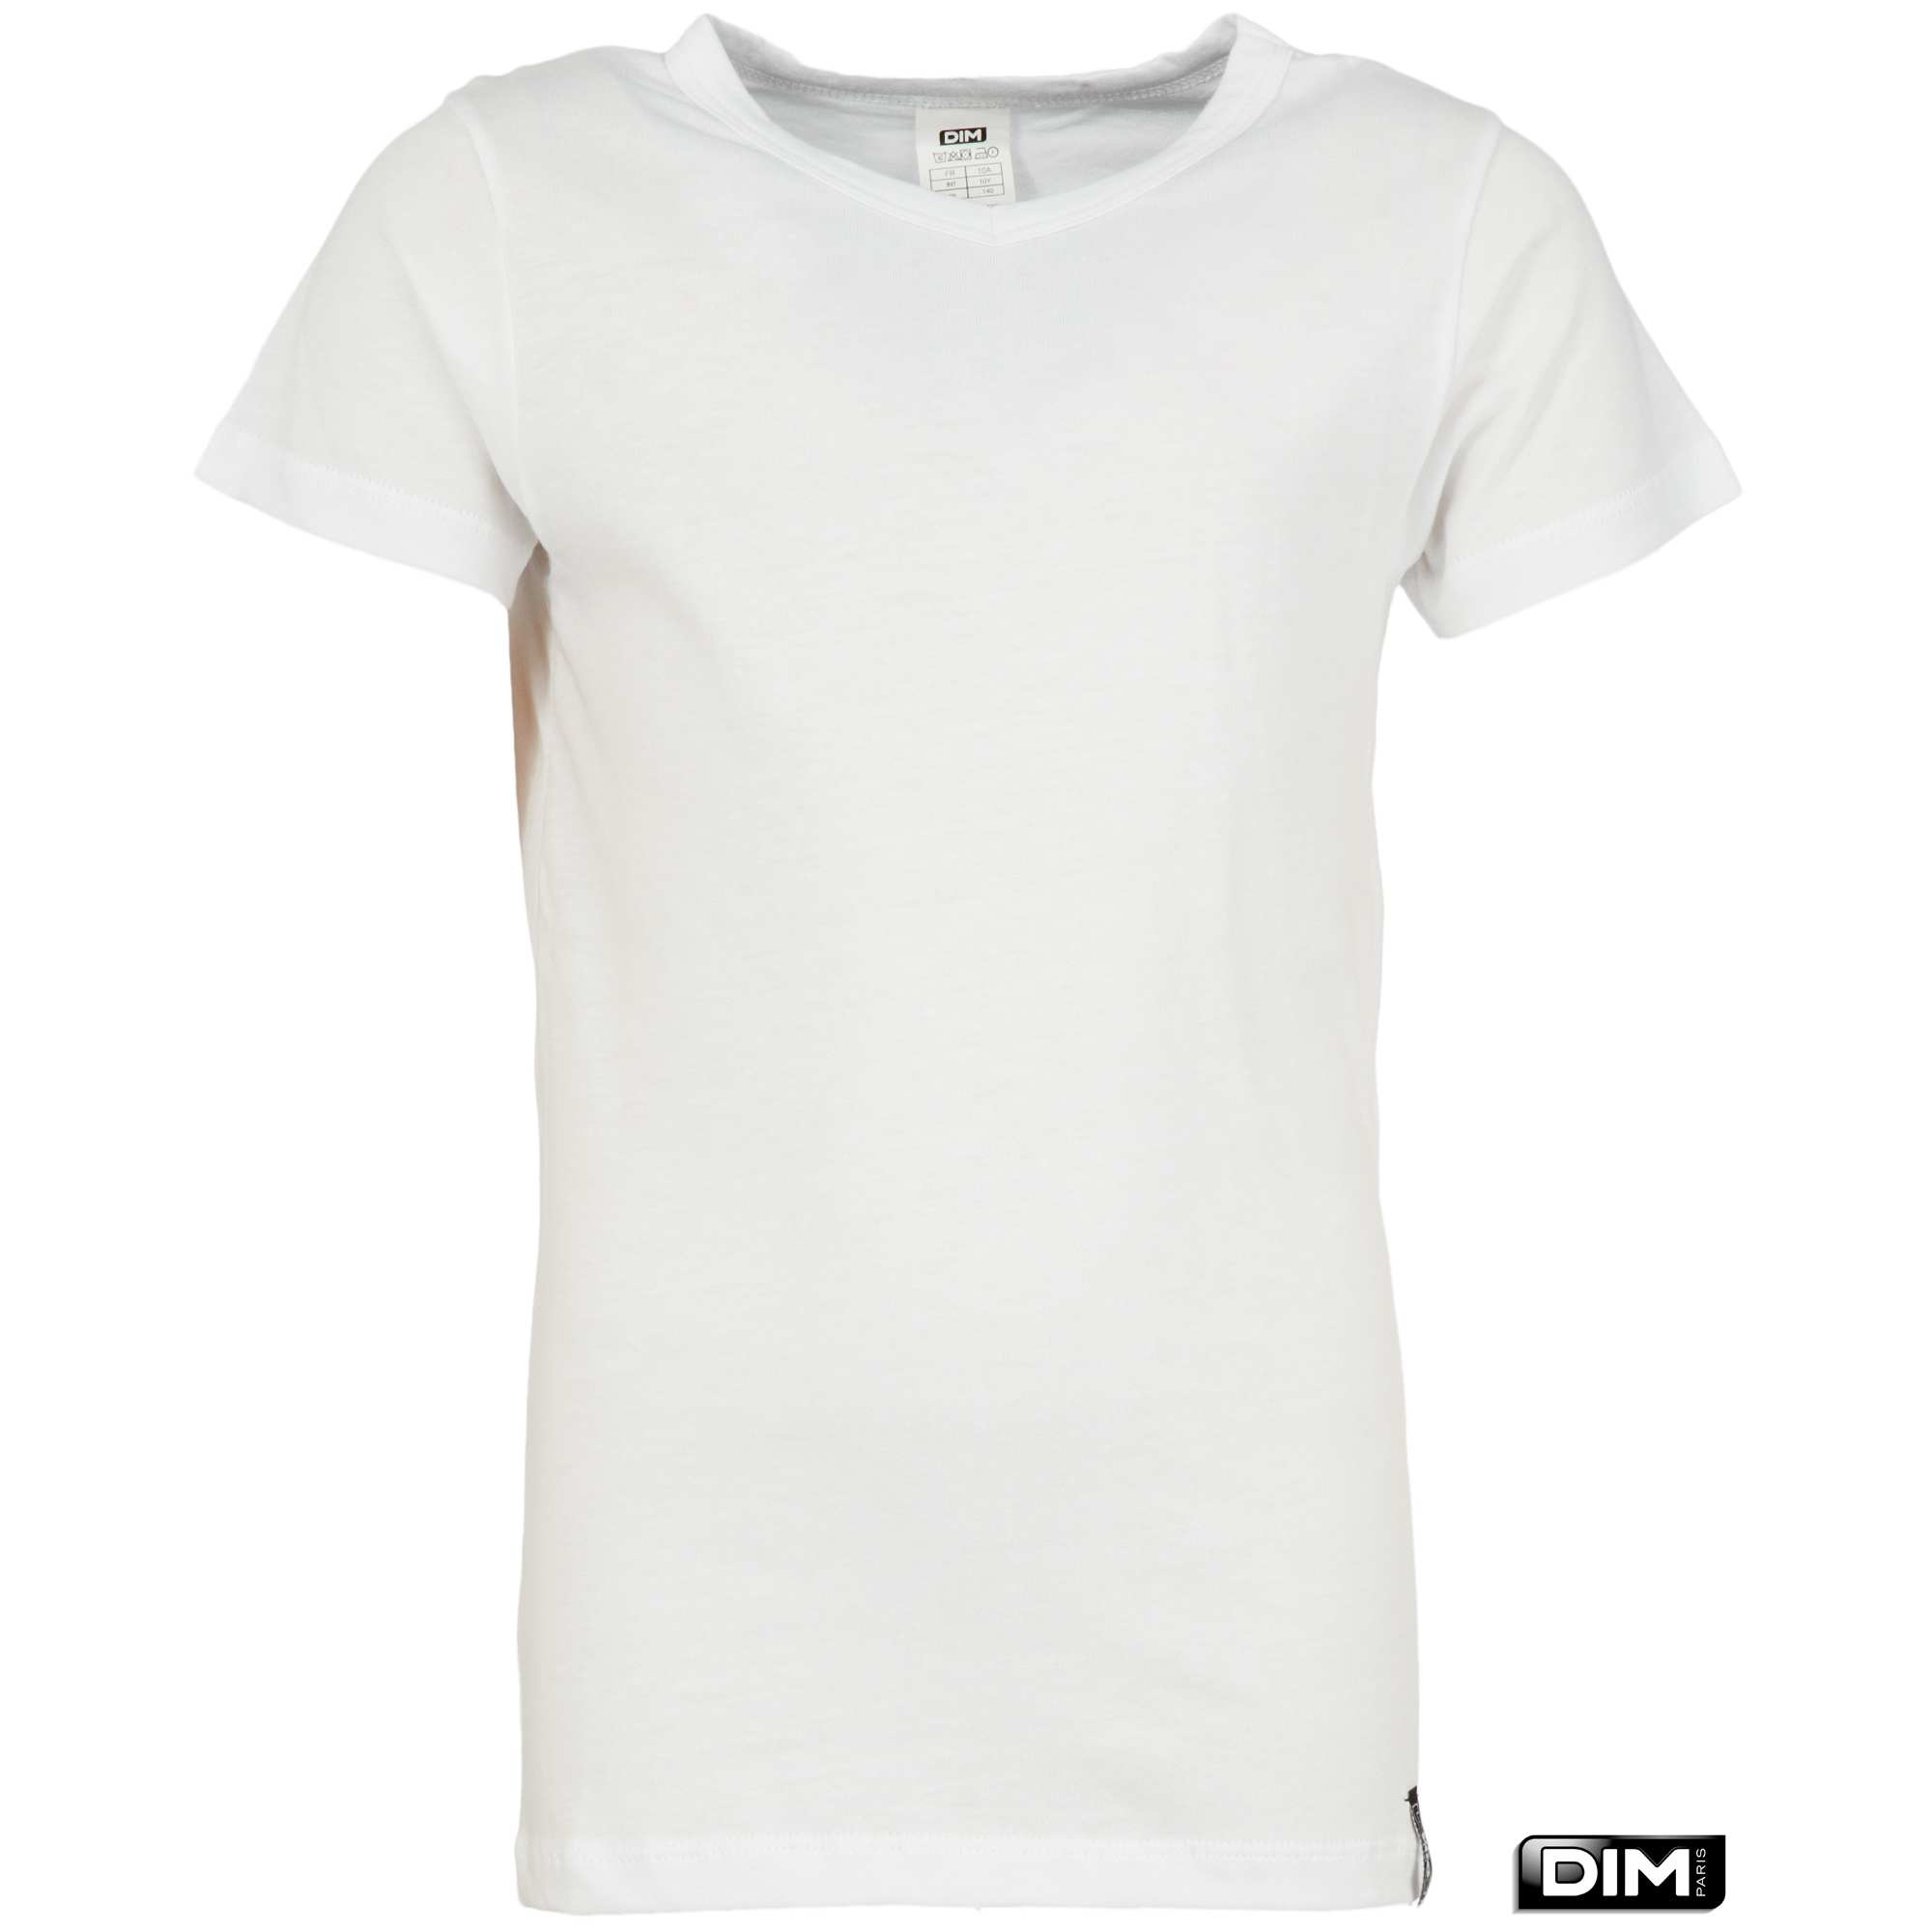 T-shirt 'Dim' Garçon adolescent - blanc - Kiabi - 8,00€